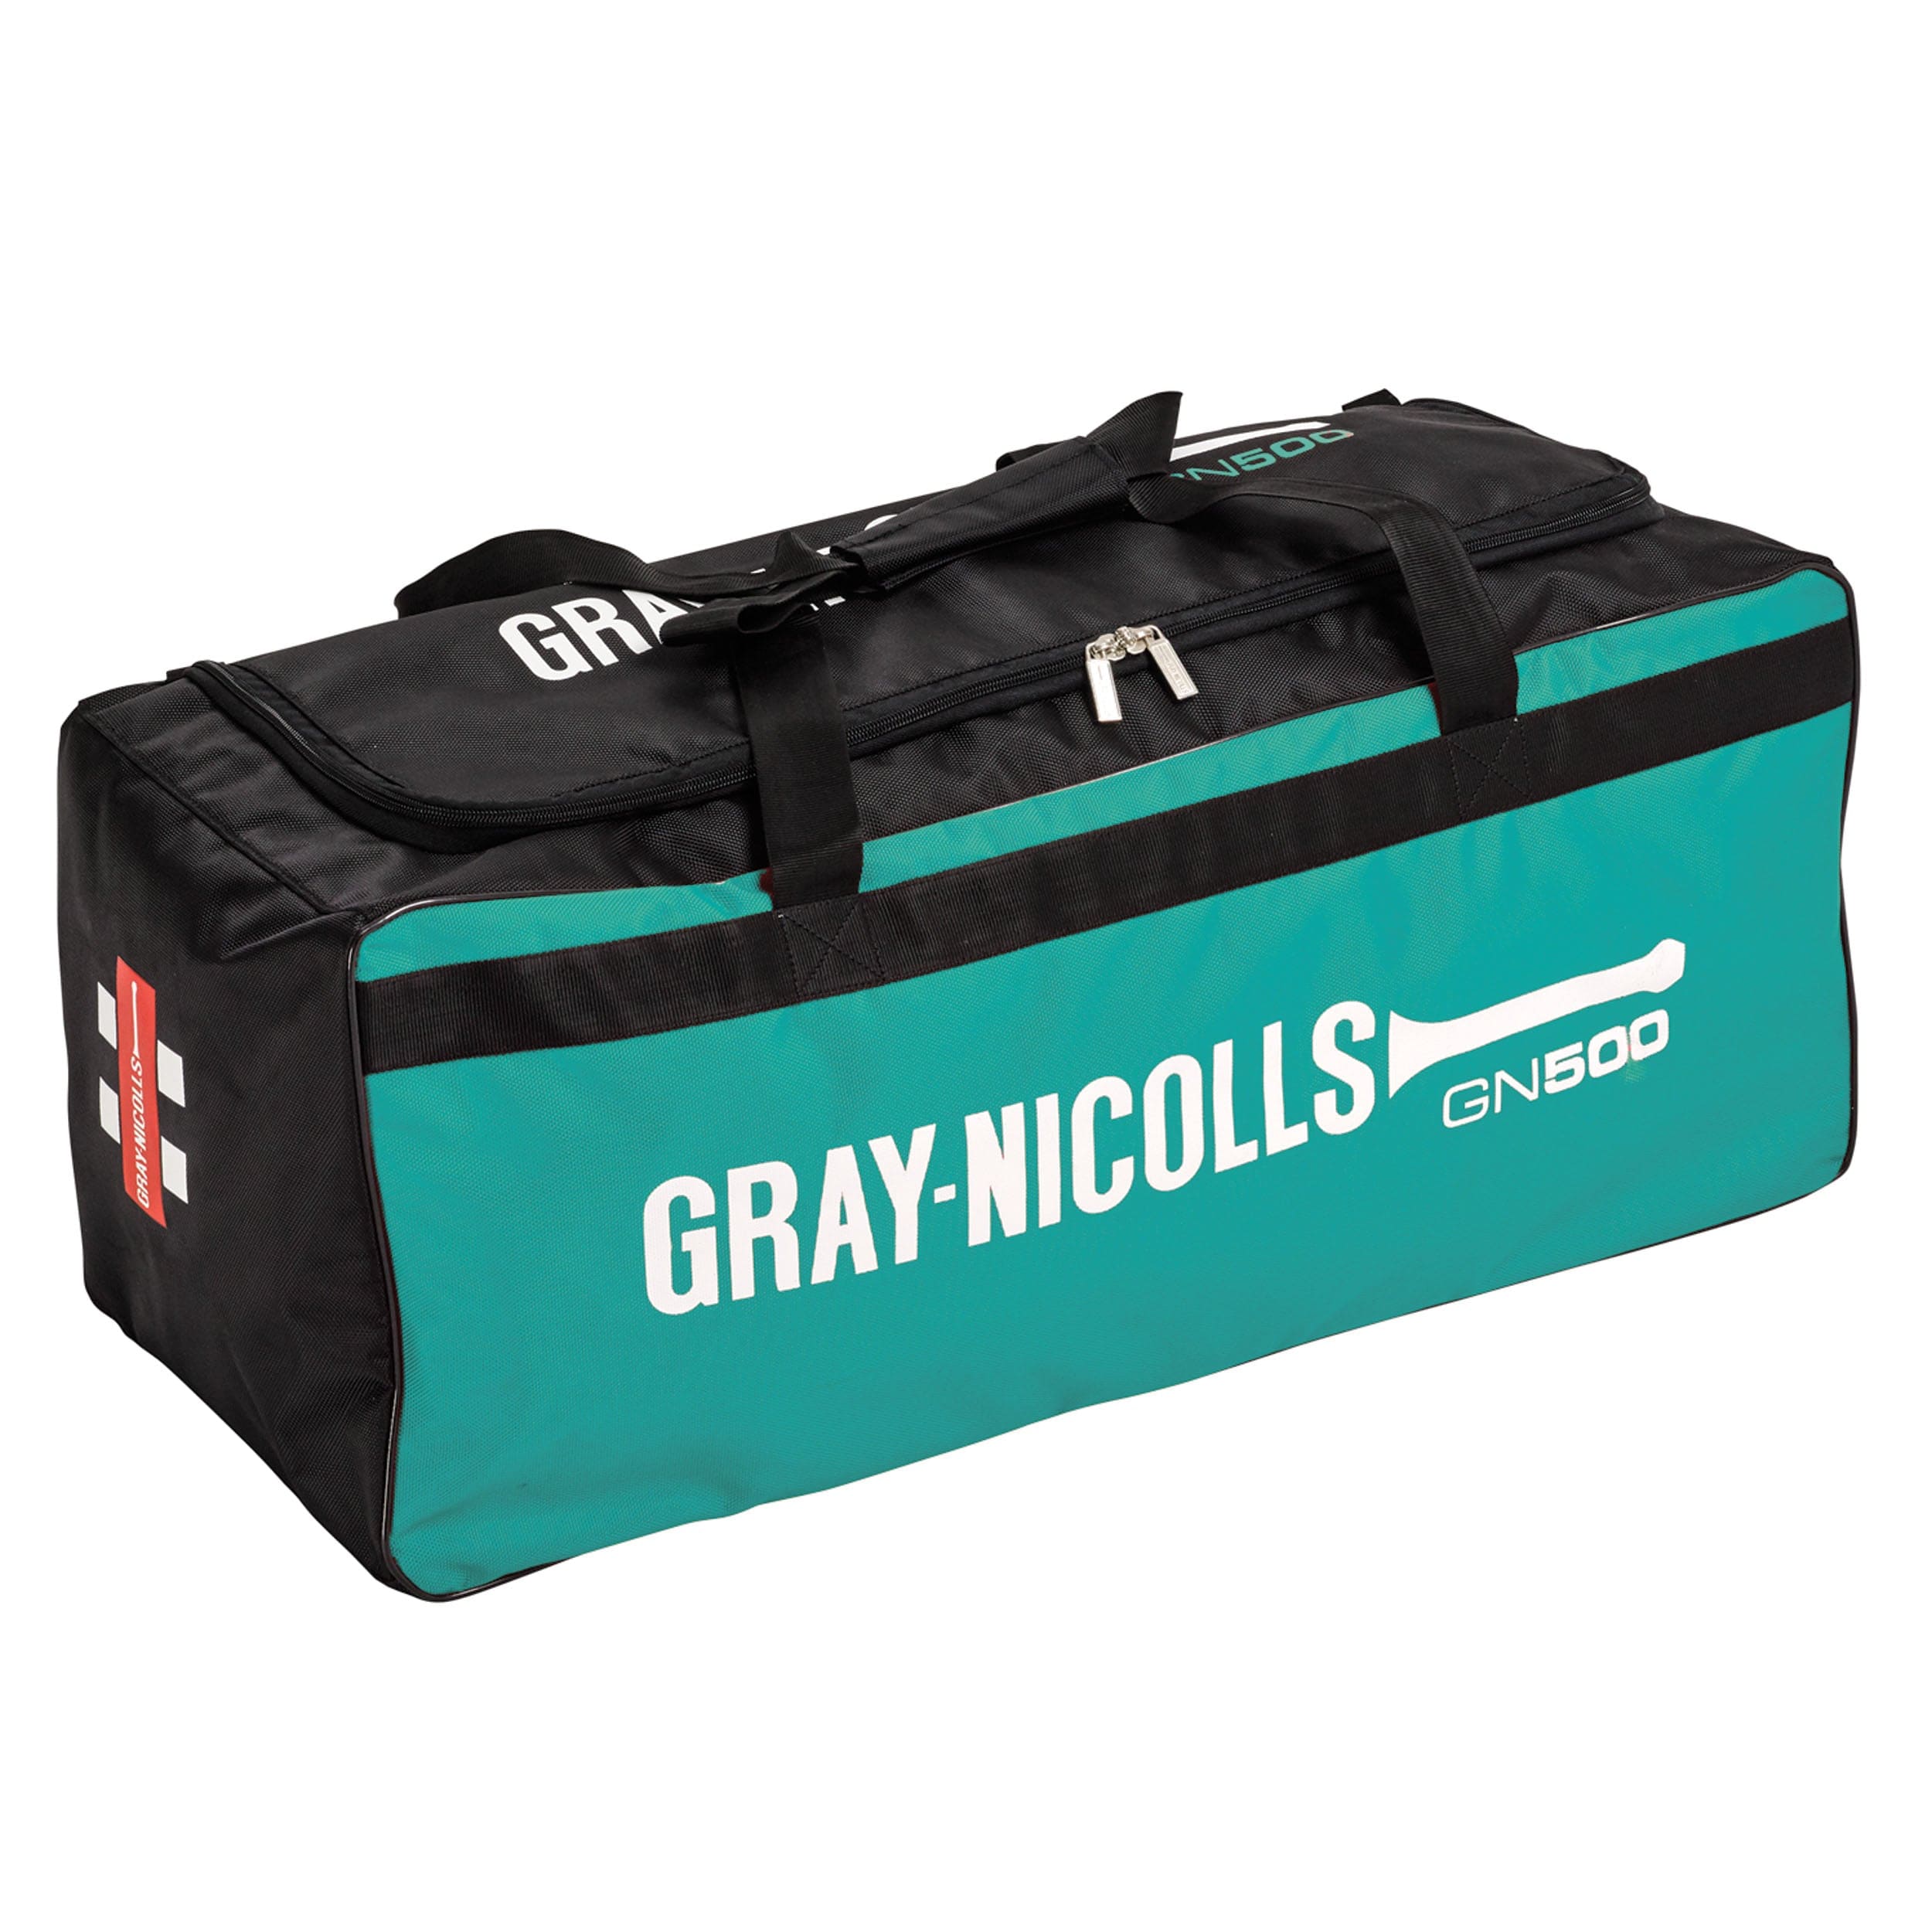 Gray Nicolls Cricket Bags Acquamarine Gray Nicolls 500 Cricket Bag